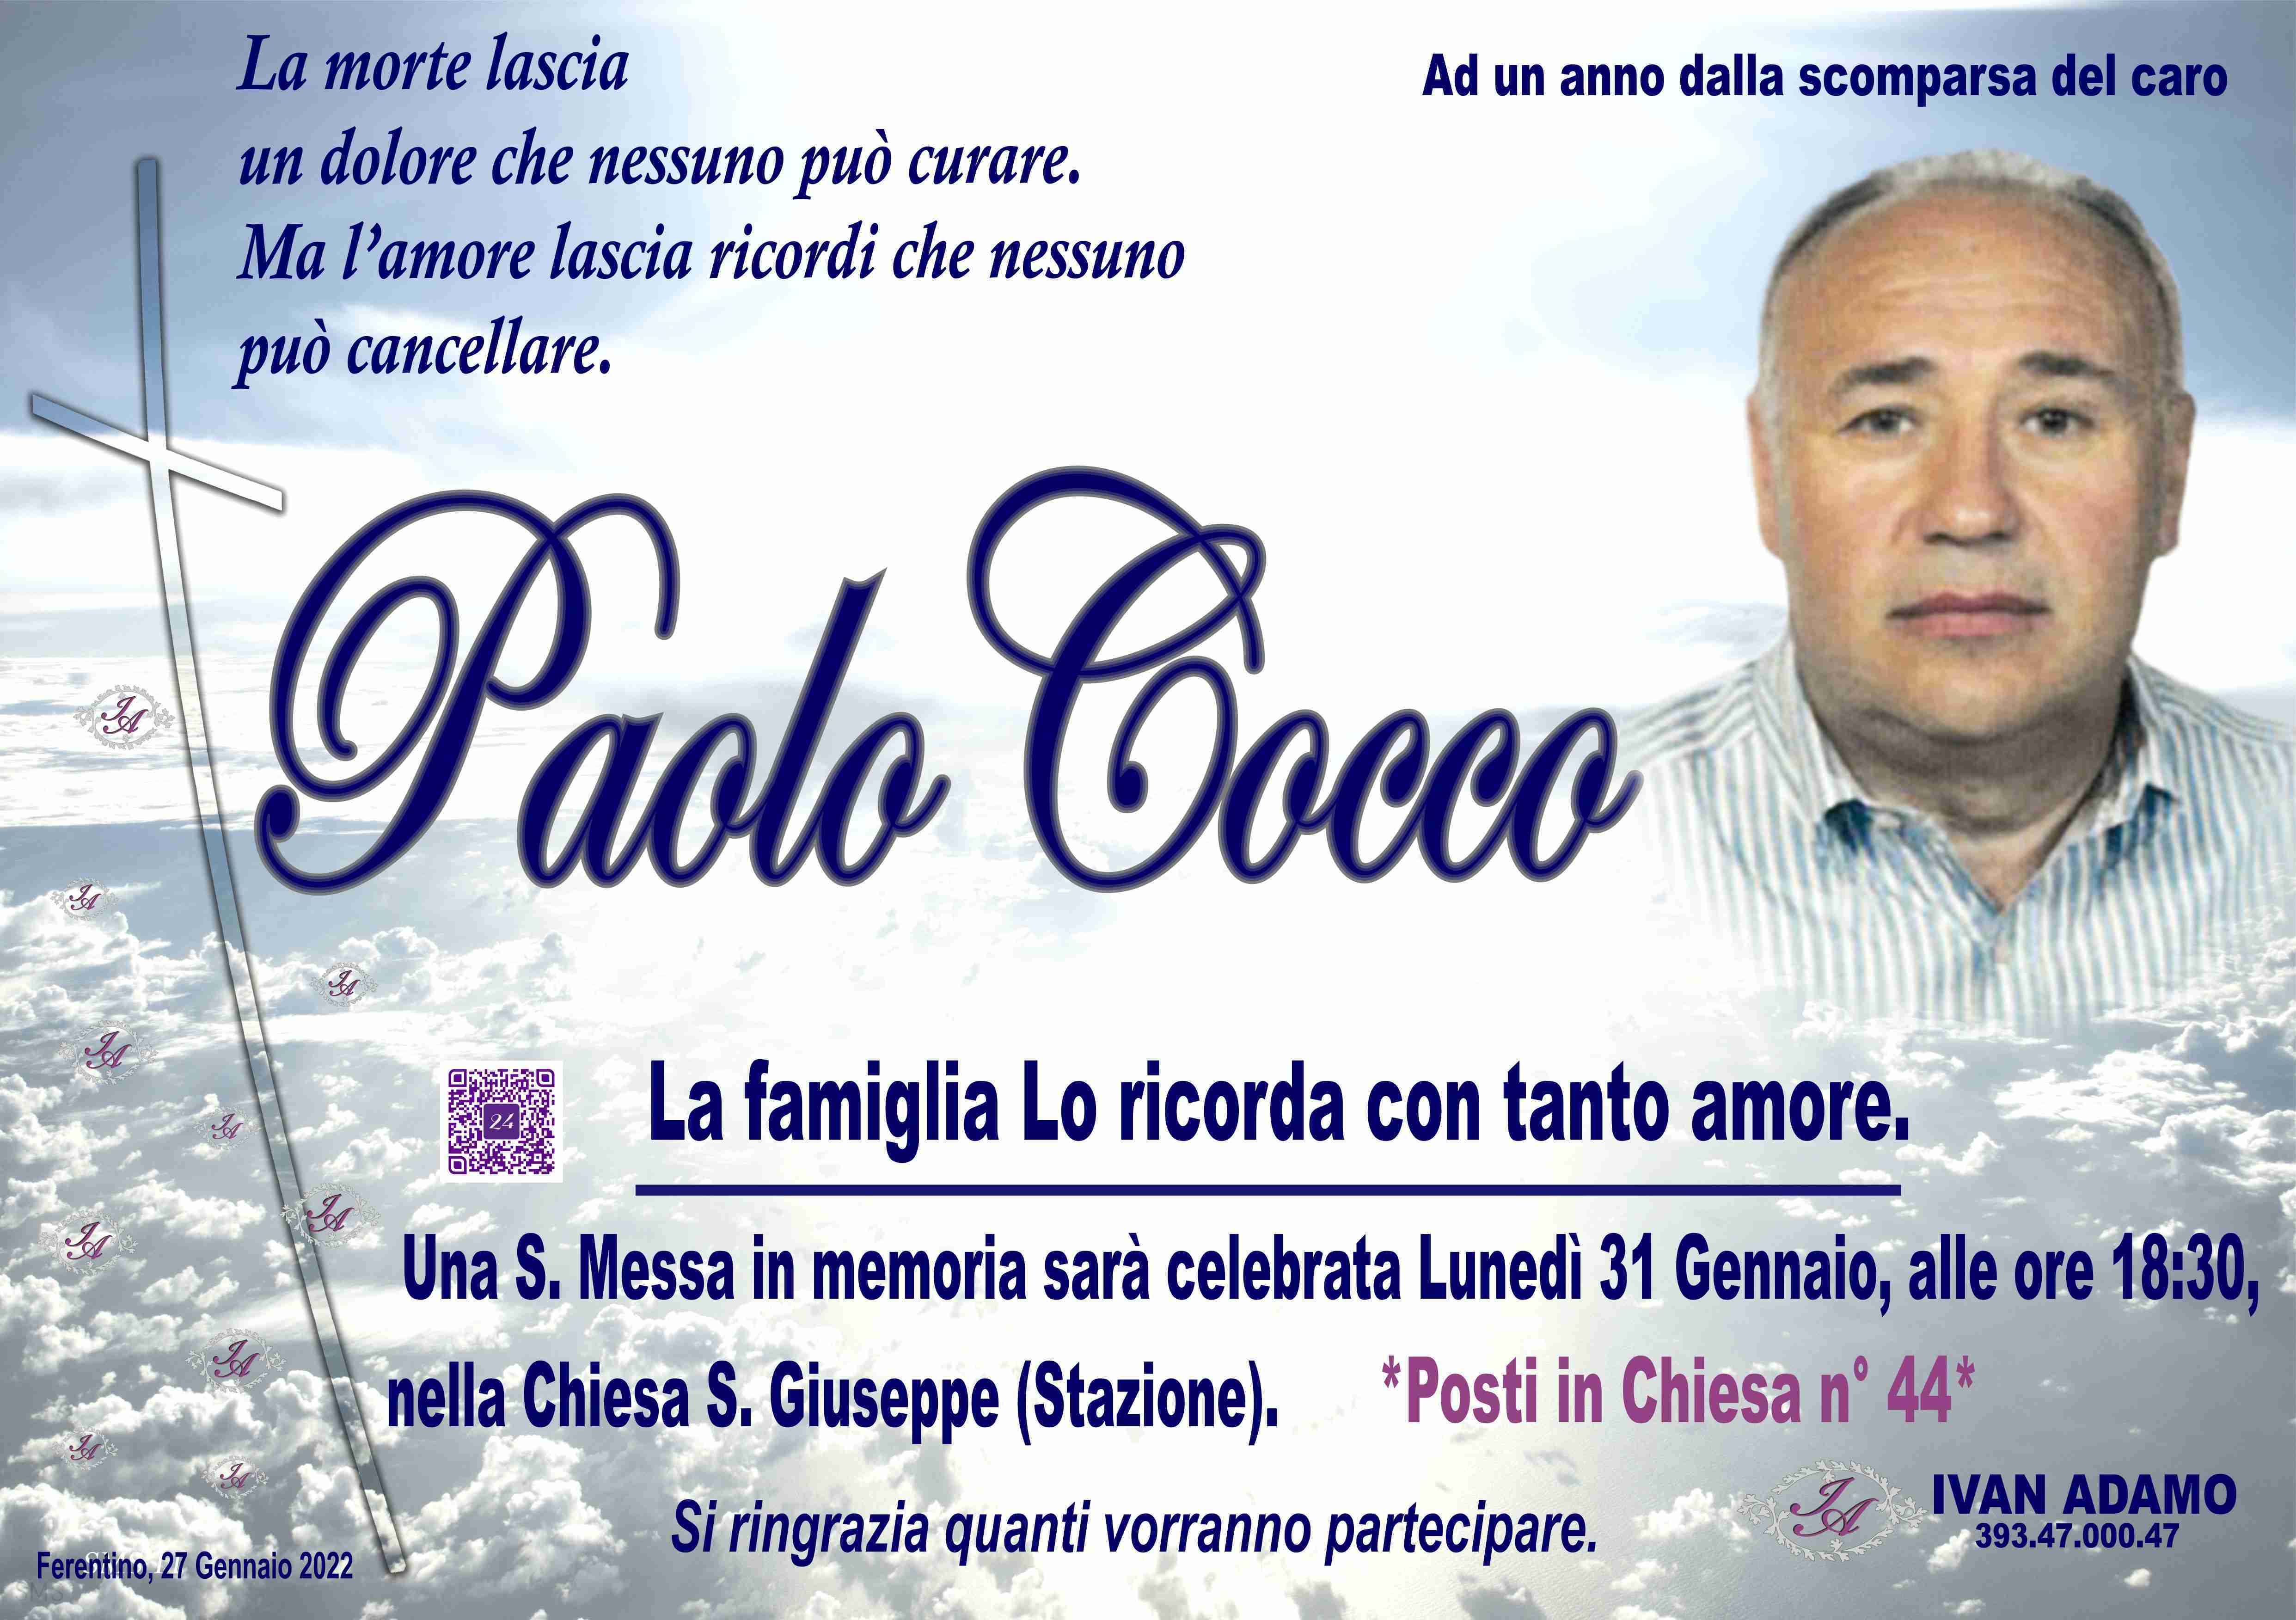 Paolo Cocco